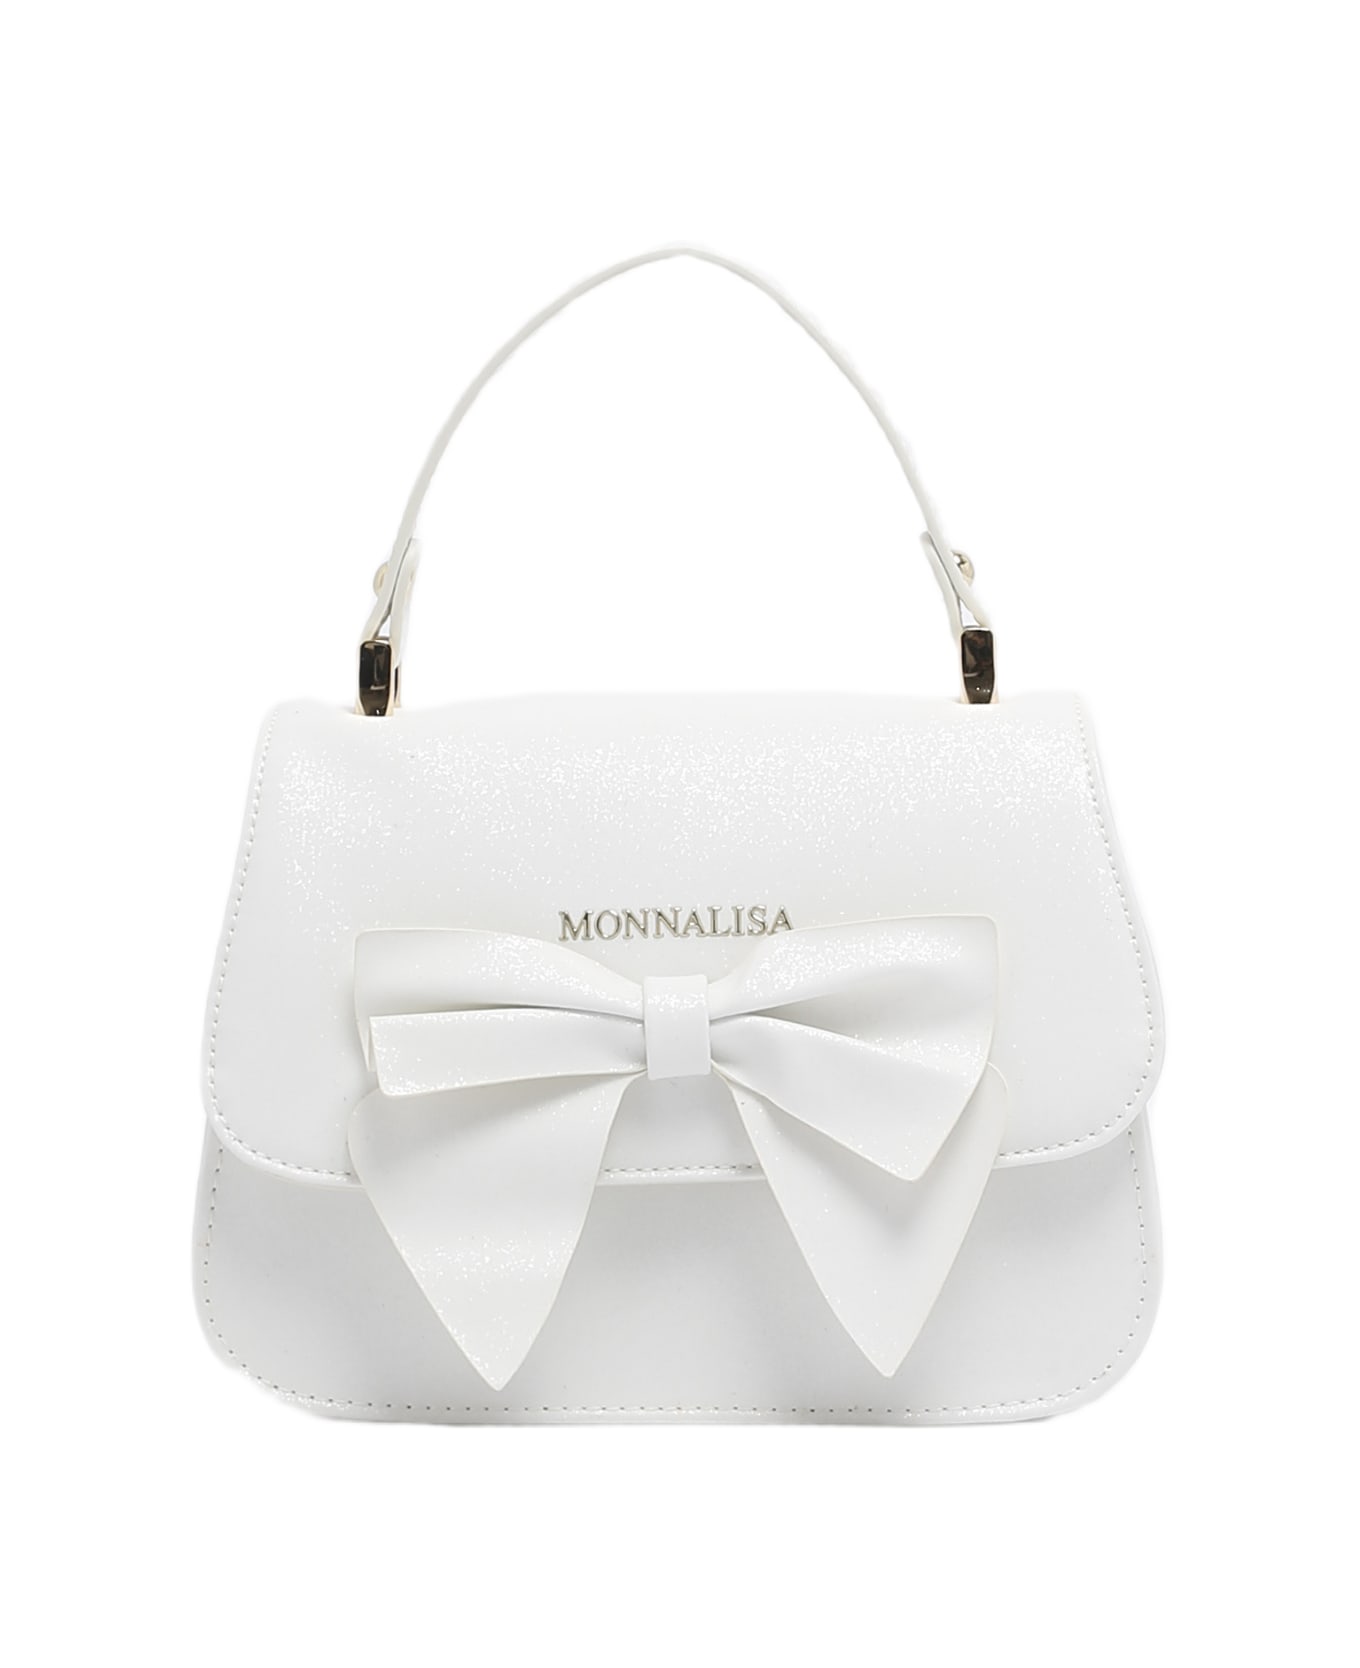 Monnalisa Handbag Shoulder Bag - BIANCO